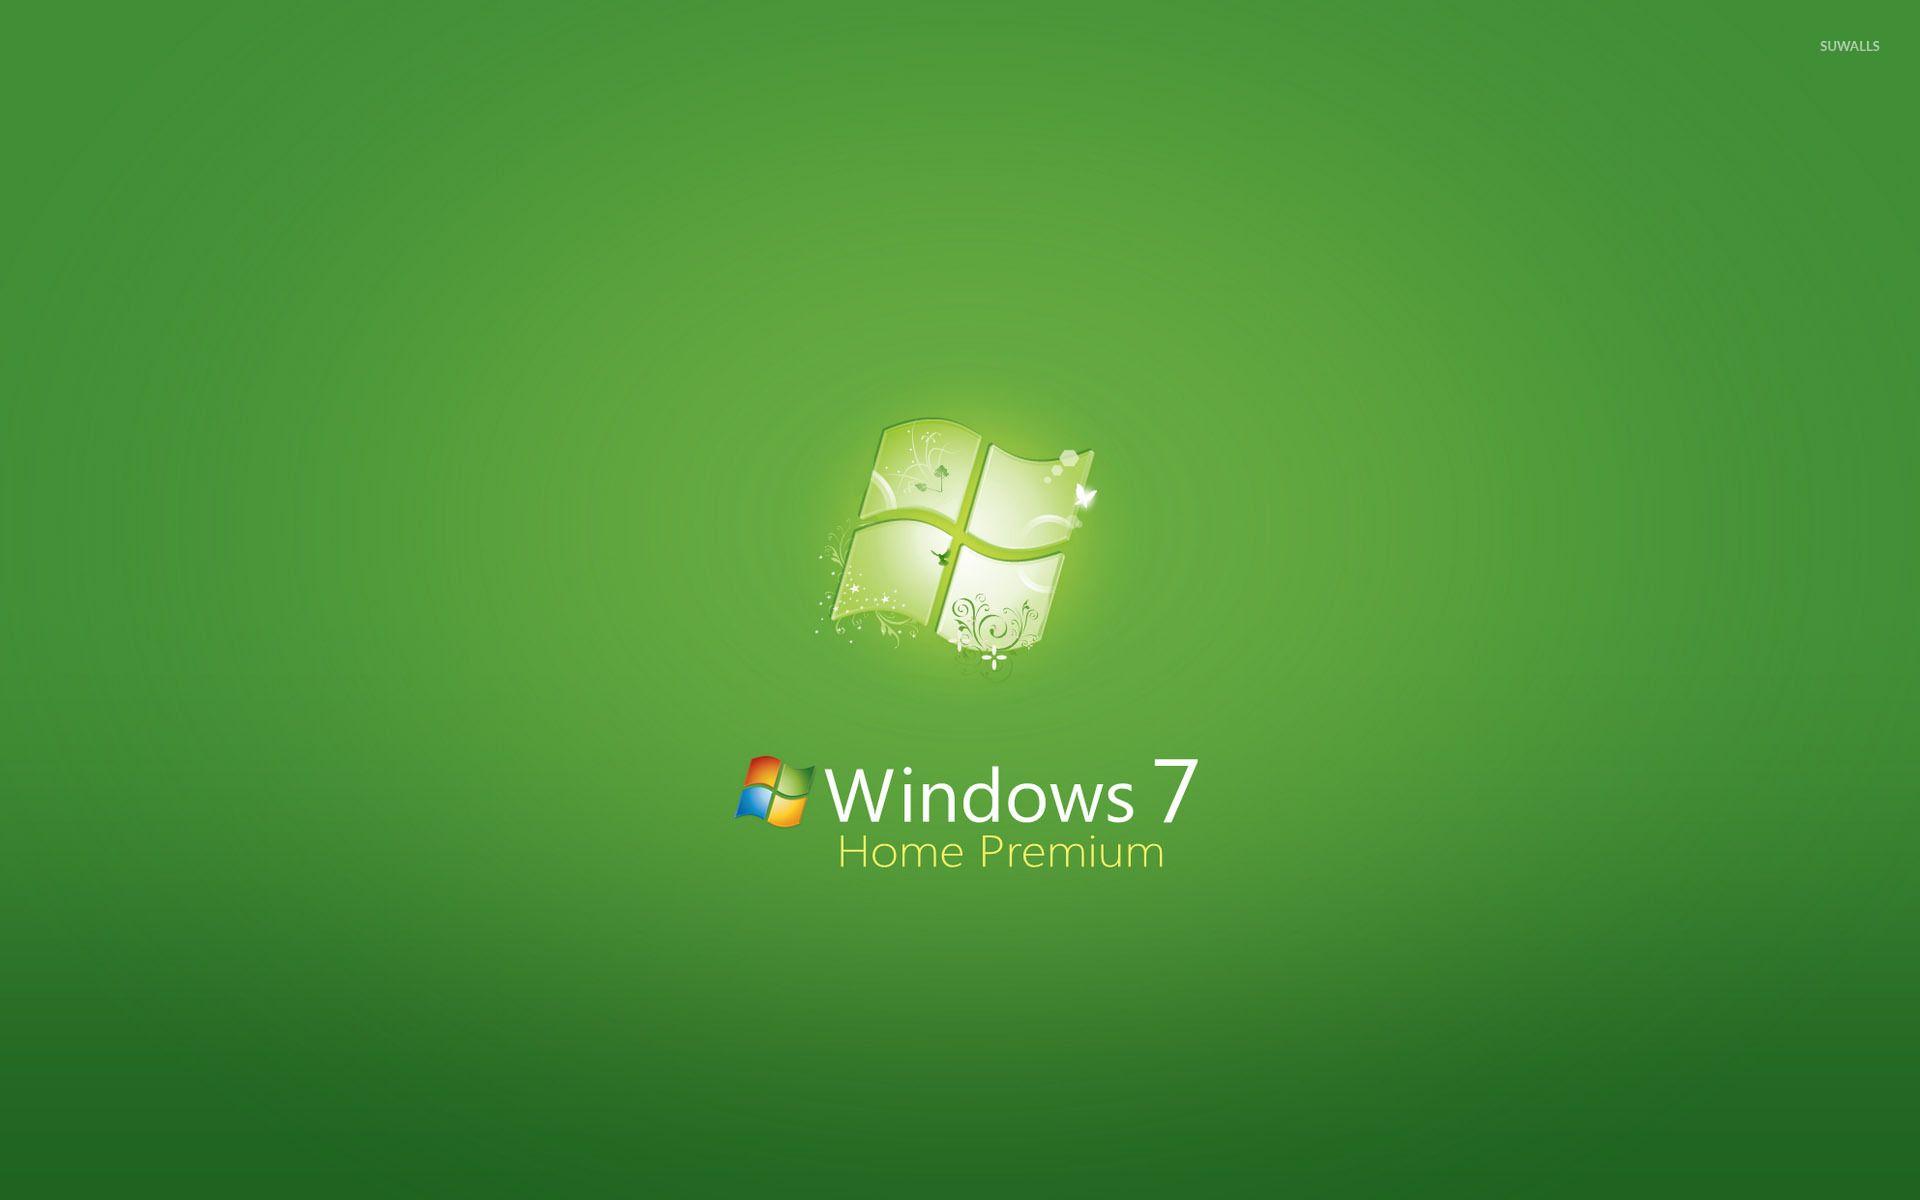 Windows 7 Home Premium wallpaper wallpaper